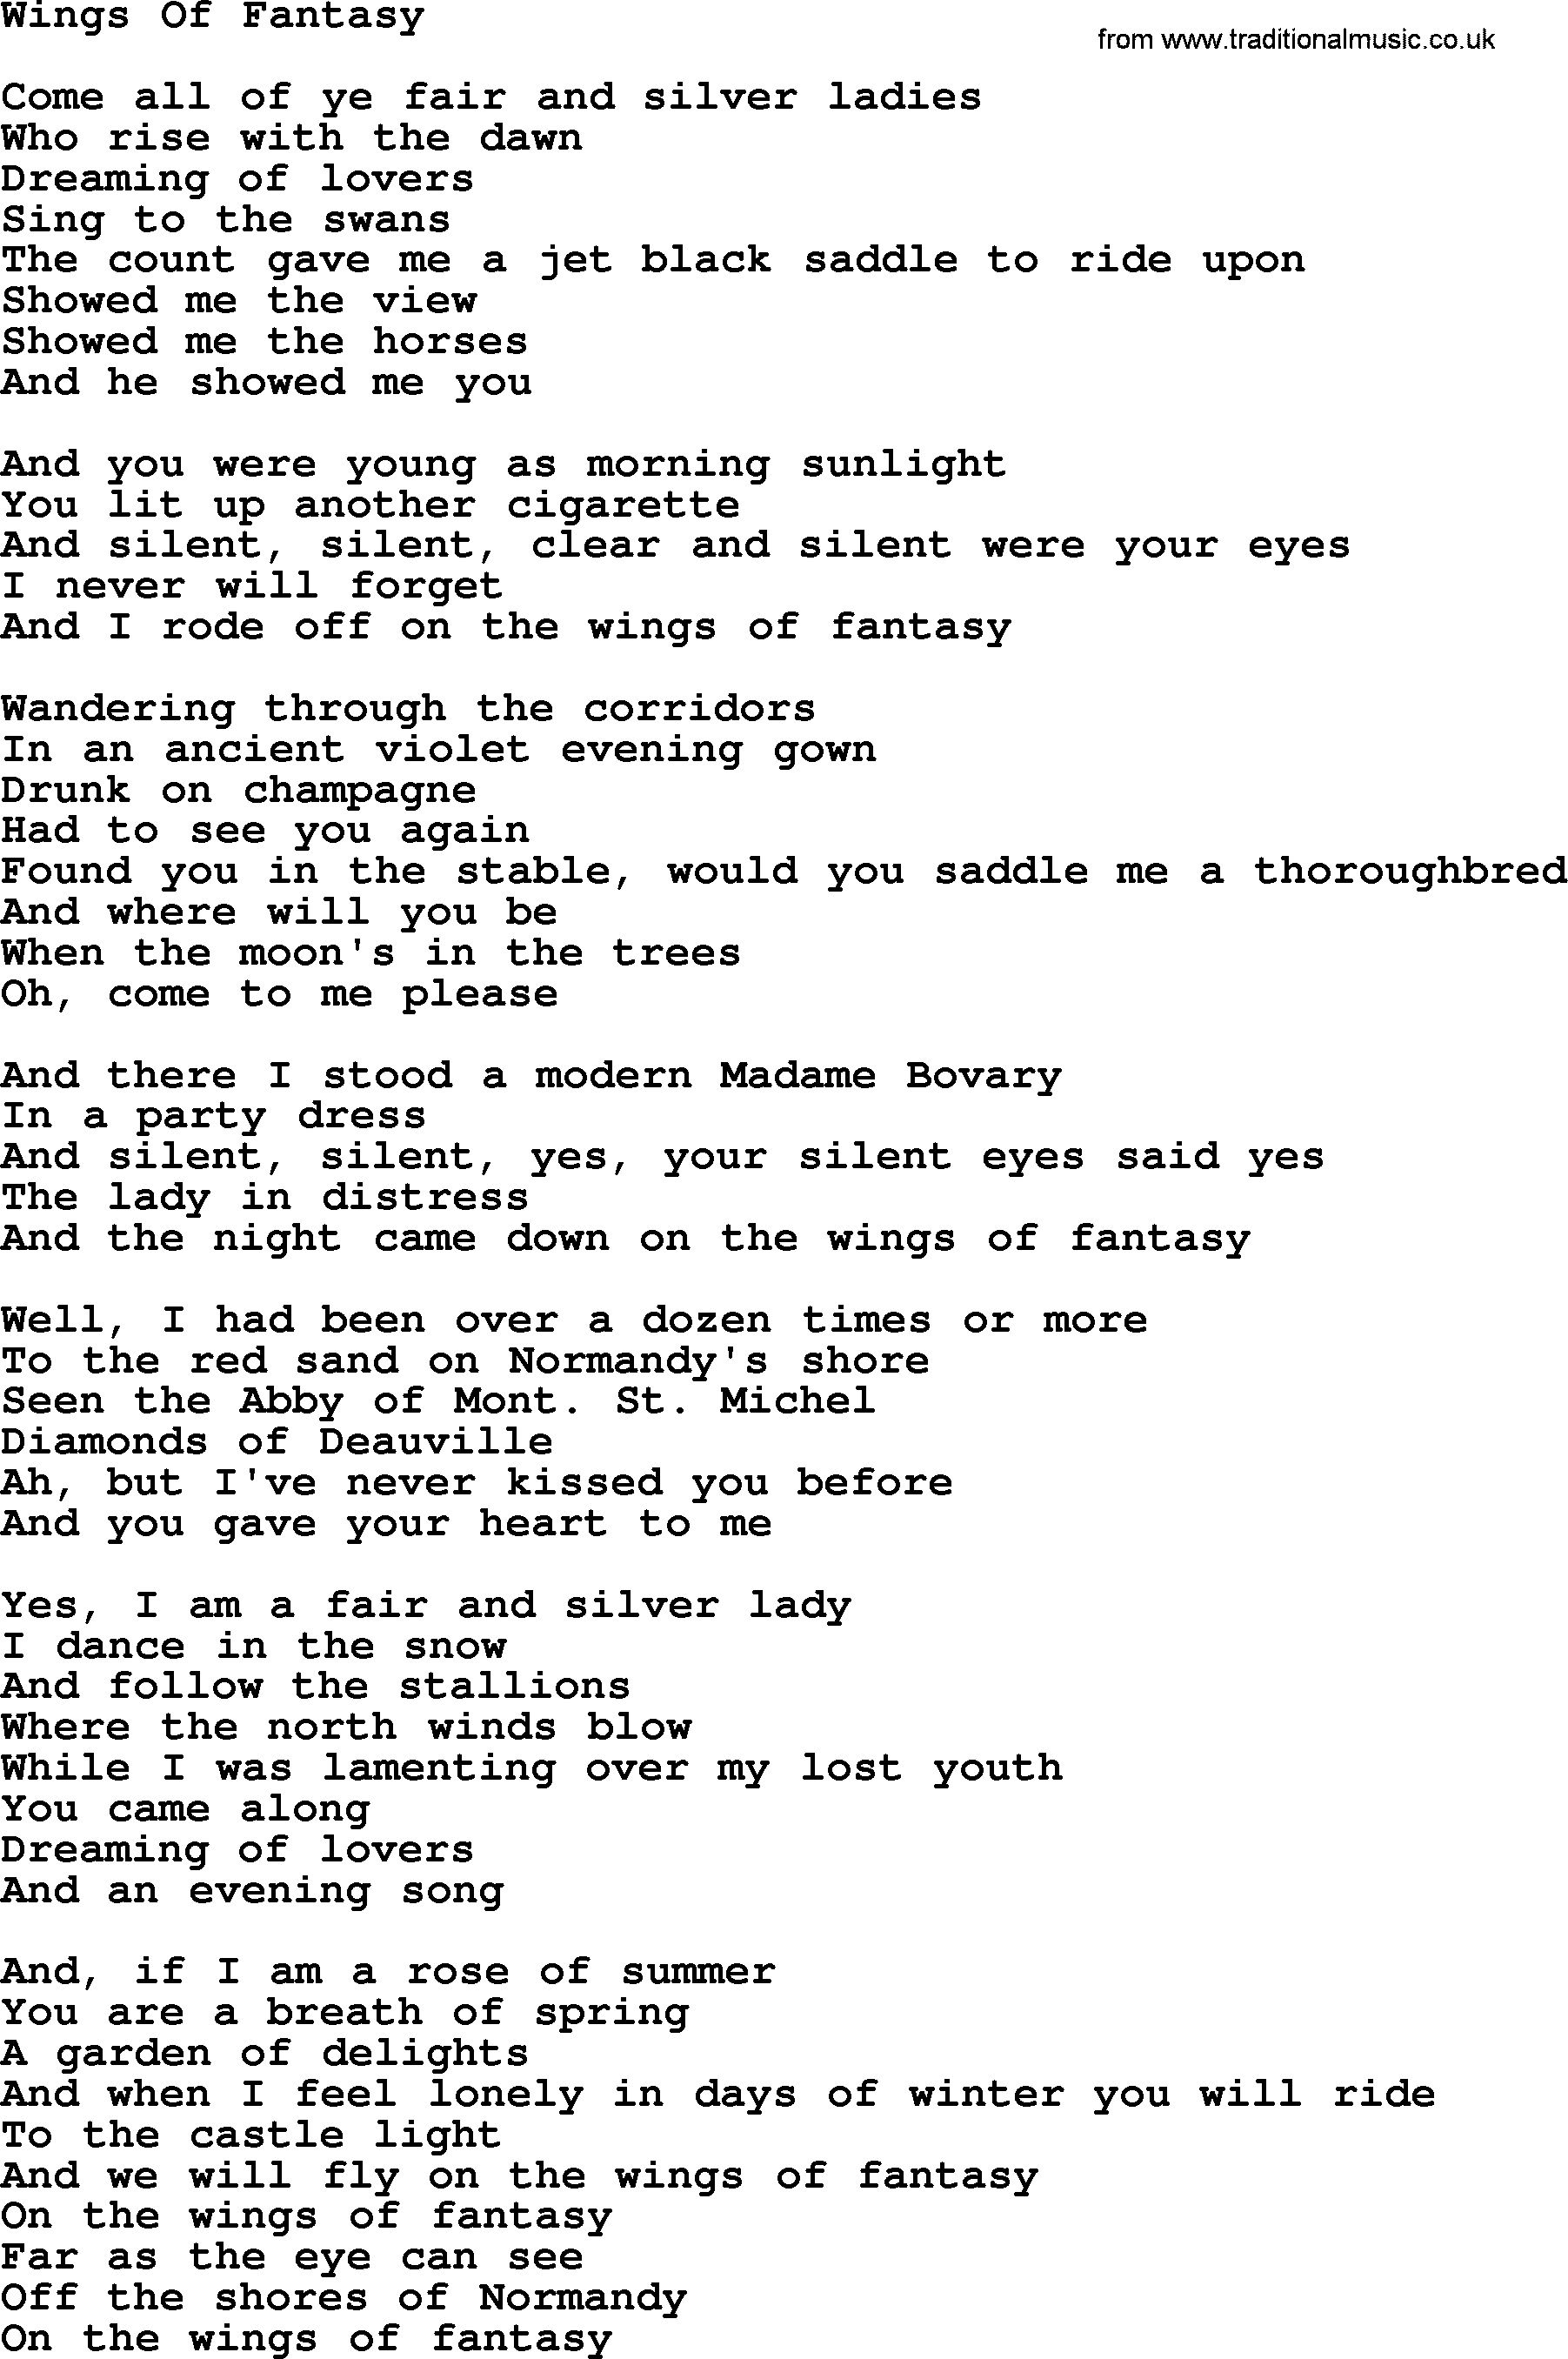 Joan Baez song Wings Of Fantasy, lyrics